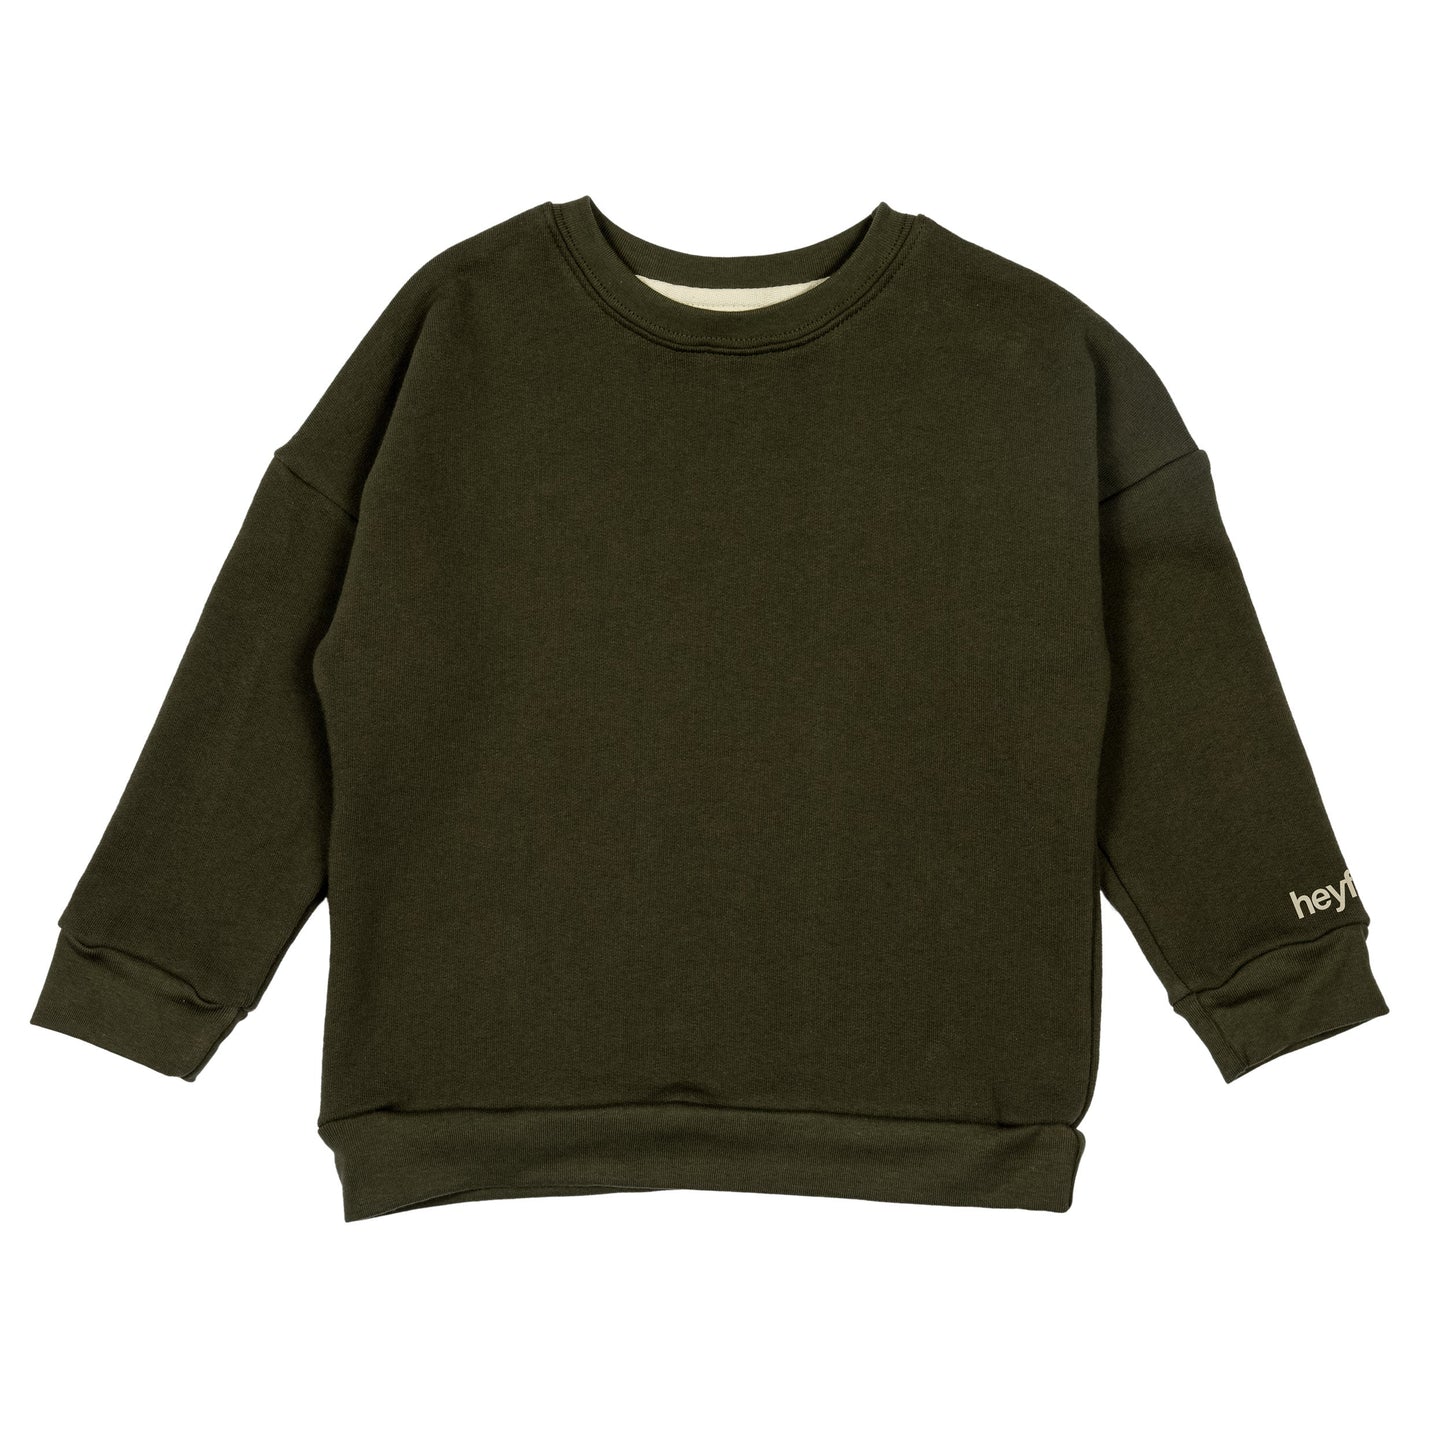 Kids Crew Neck Pullover - Basic - Olive Shirts & Tops heyfolks 